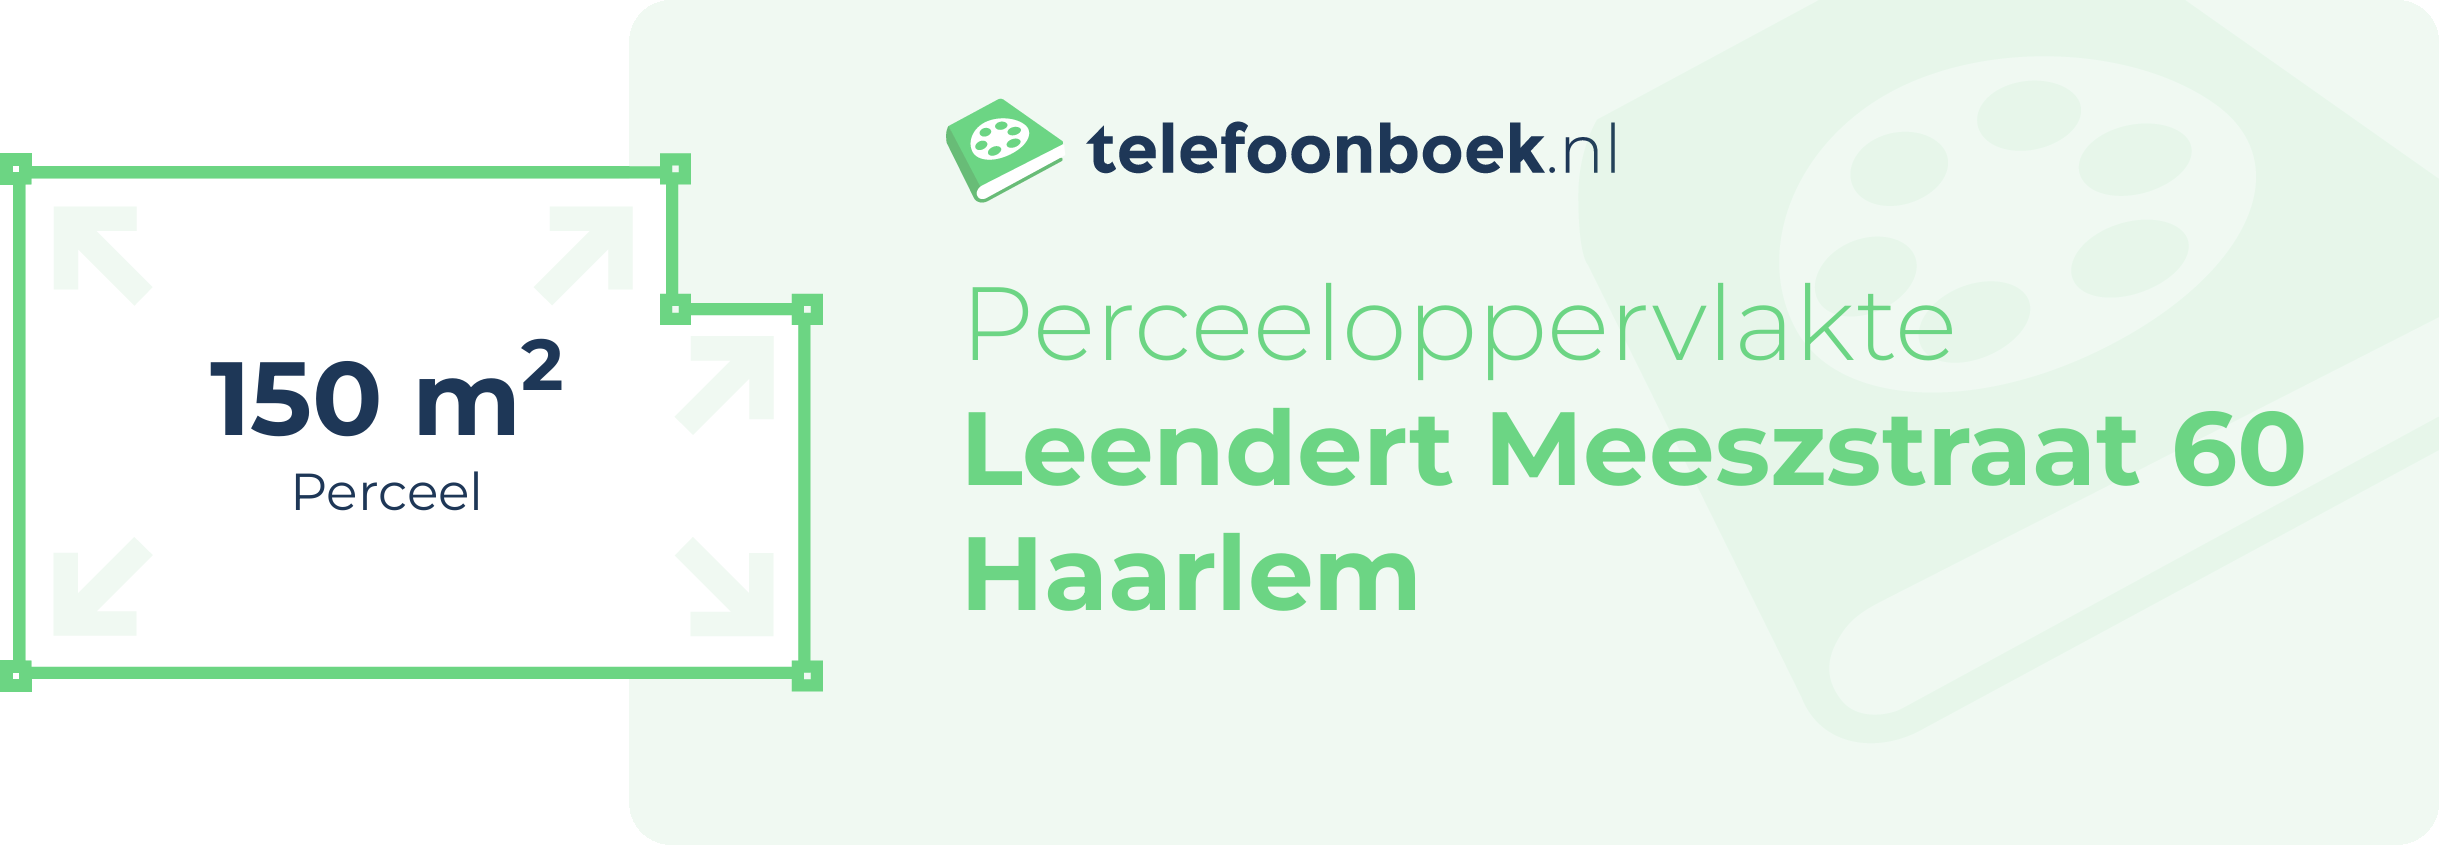 Perceeloppervlakte Leendert Meeszstraat 60 Haarlem